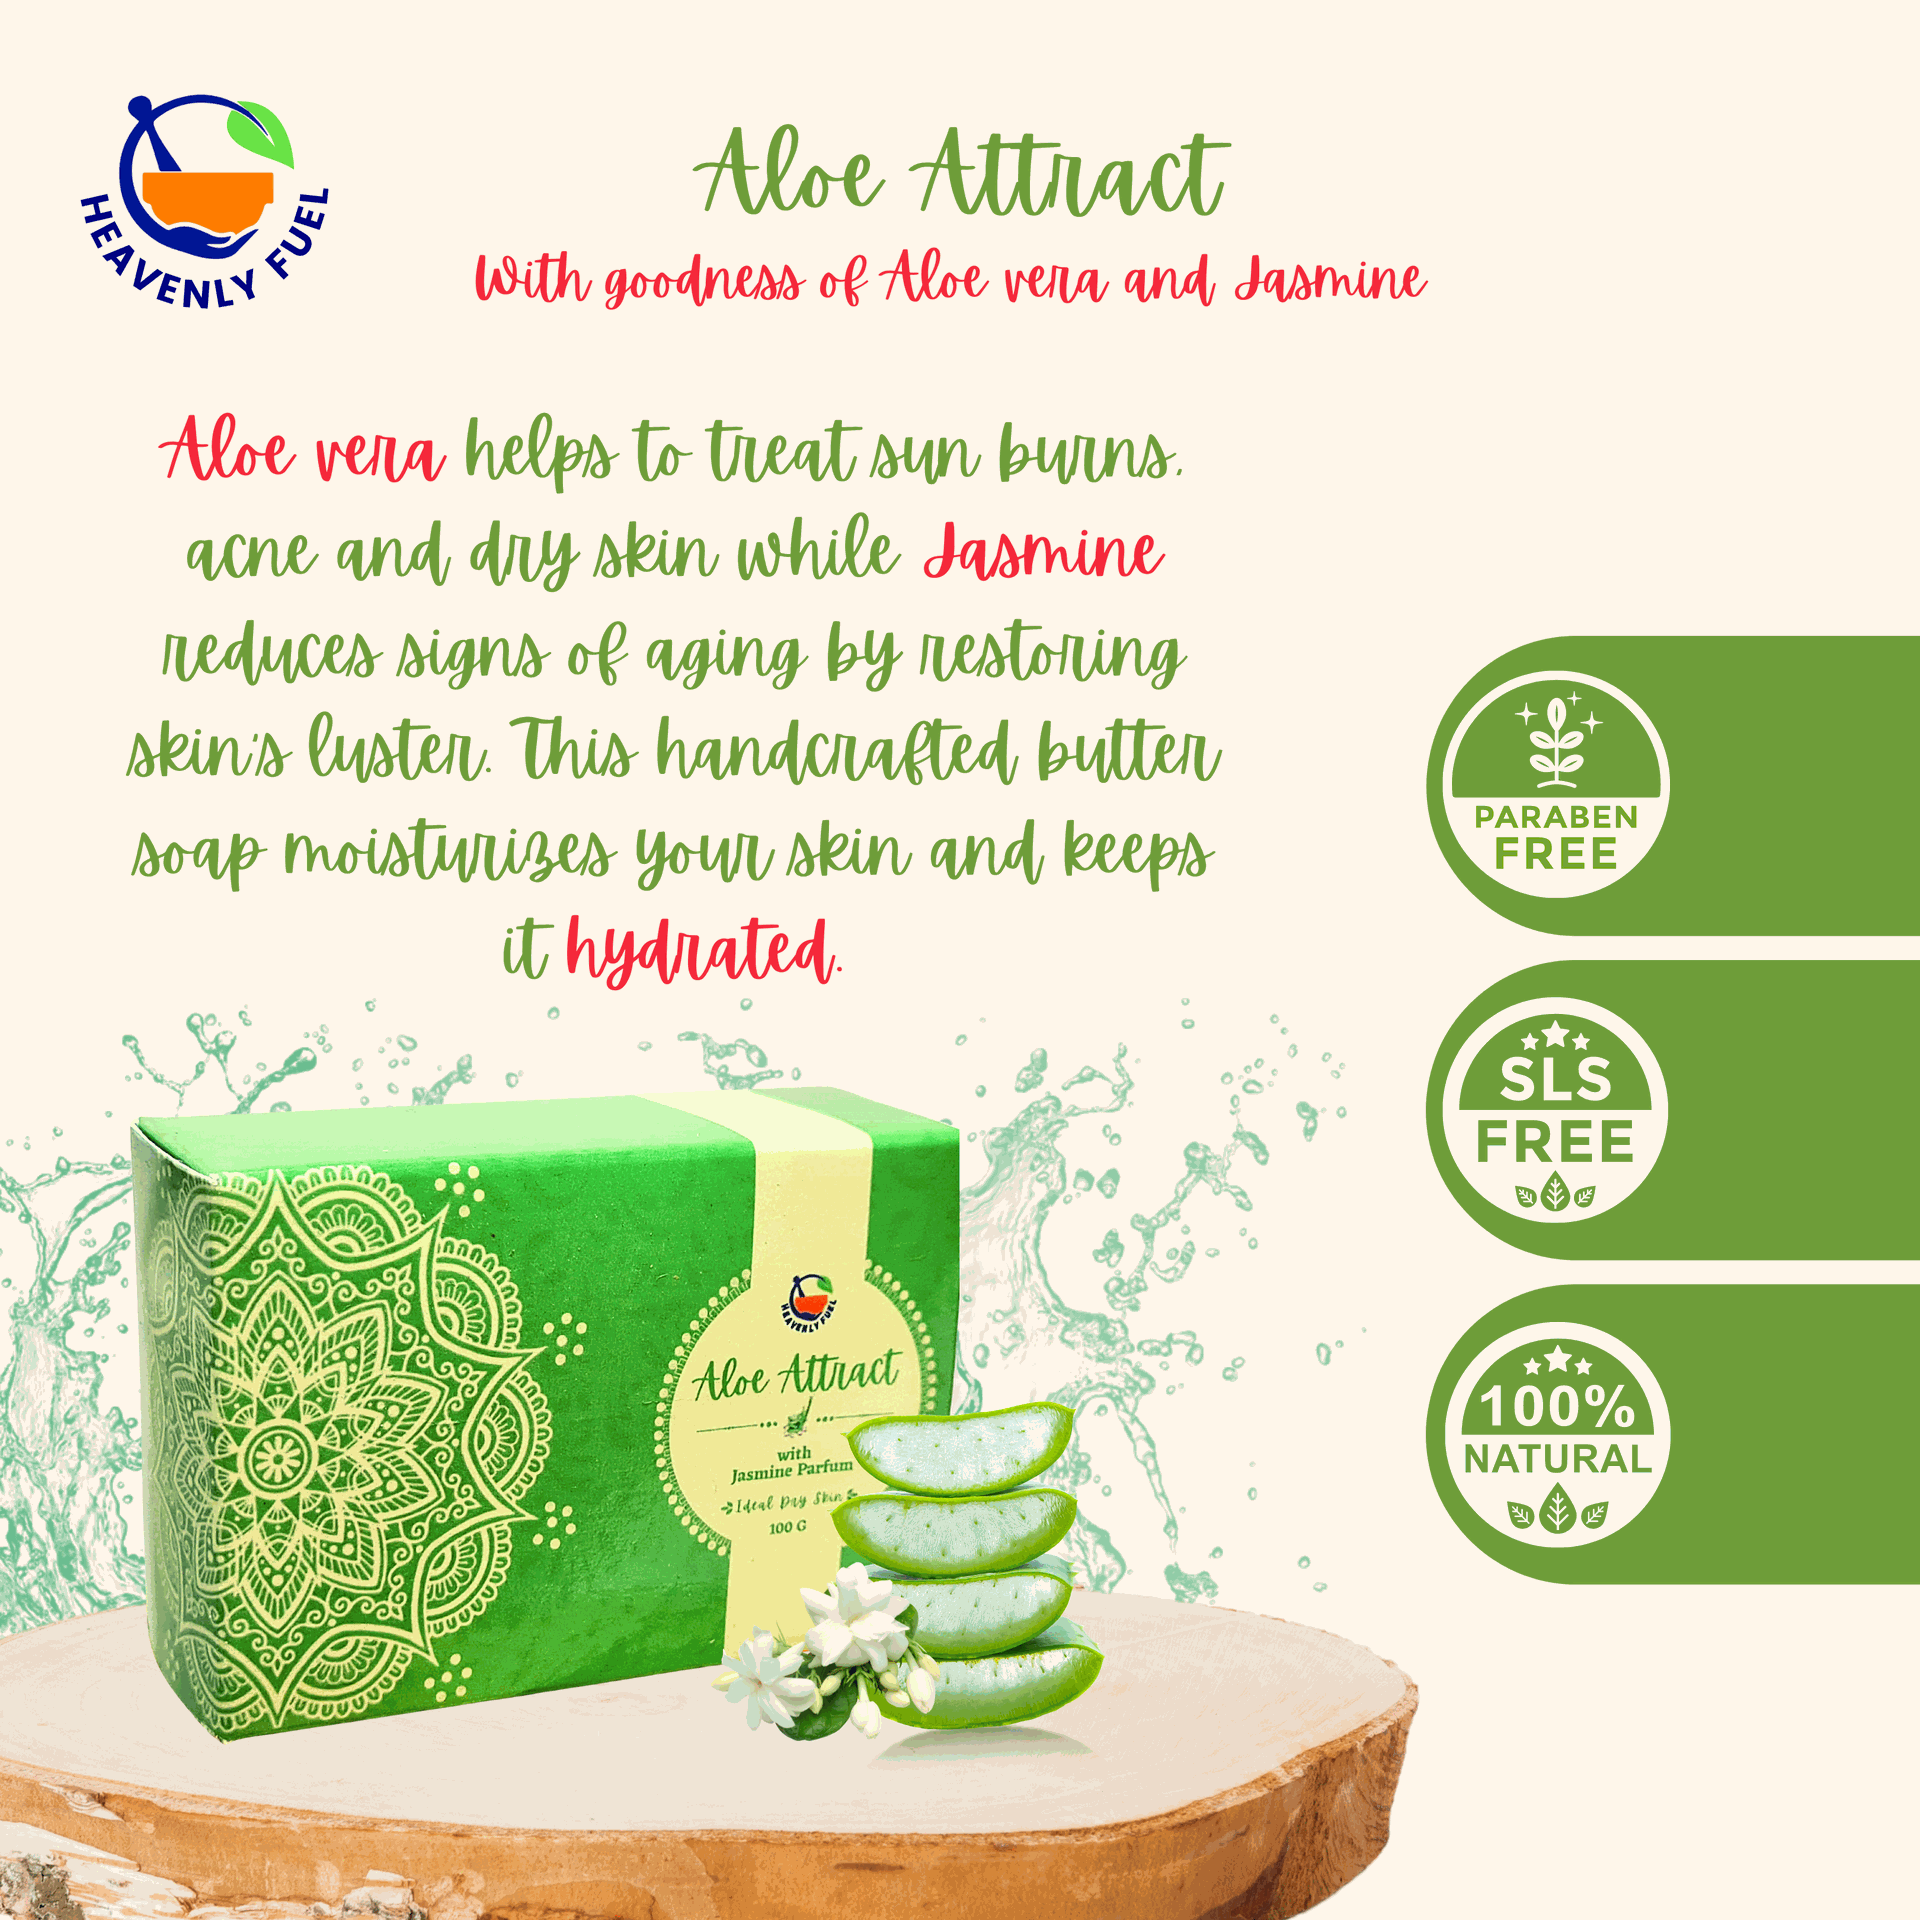 Aloe Attract |Handmade Butter Soap|100g - hfnl!fe